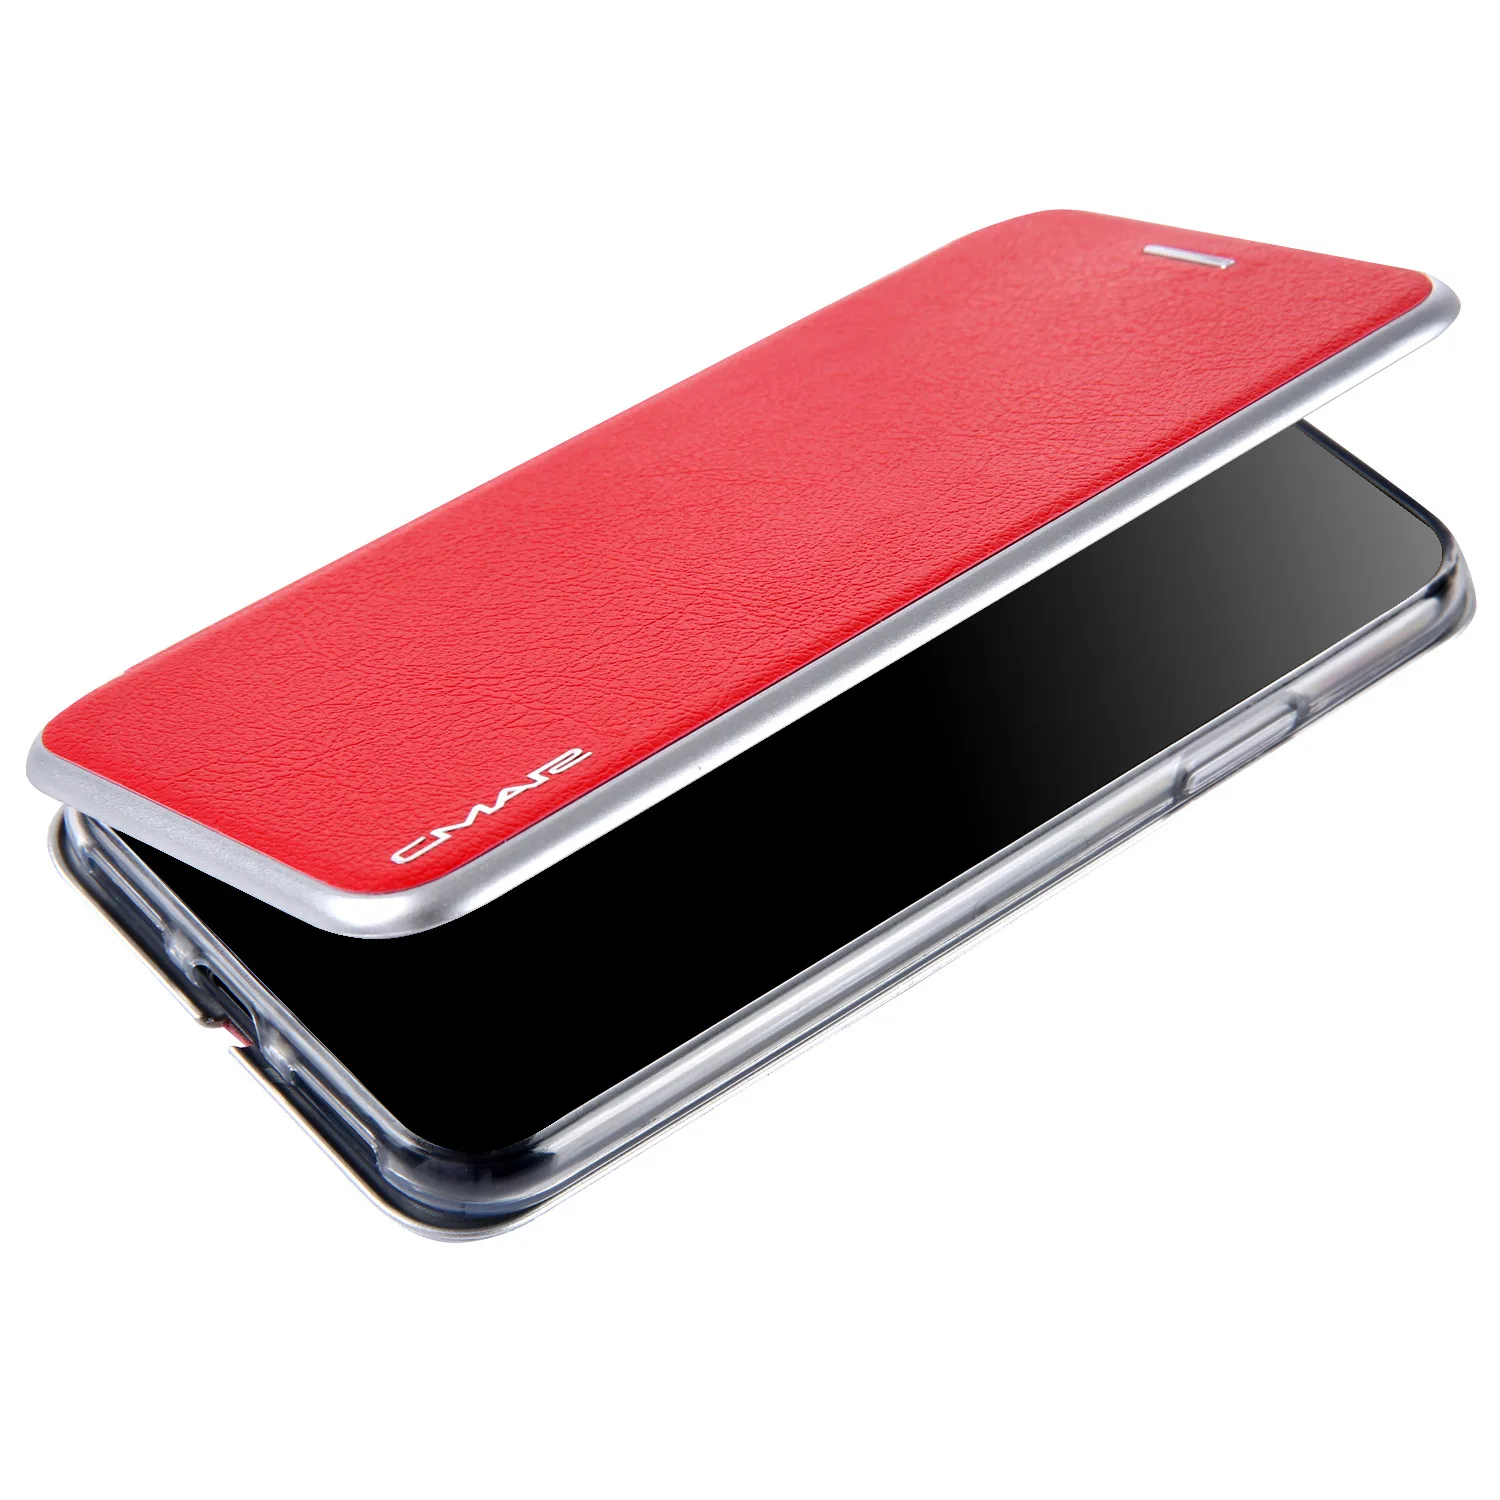 Роскошный чехол для телефона IPhone X XS MAX XR 8 7 6 Plus кожаный чехол тонкий чехол для samsung Galaxy S7 Edge S8 S9 Plus Note 8